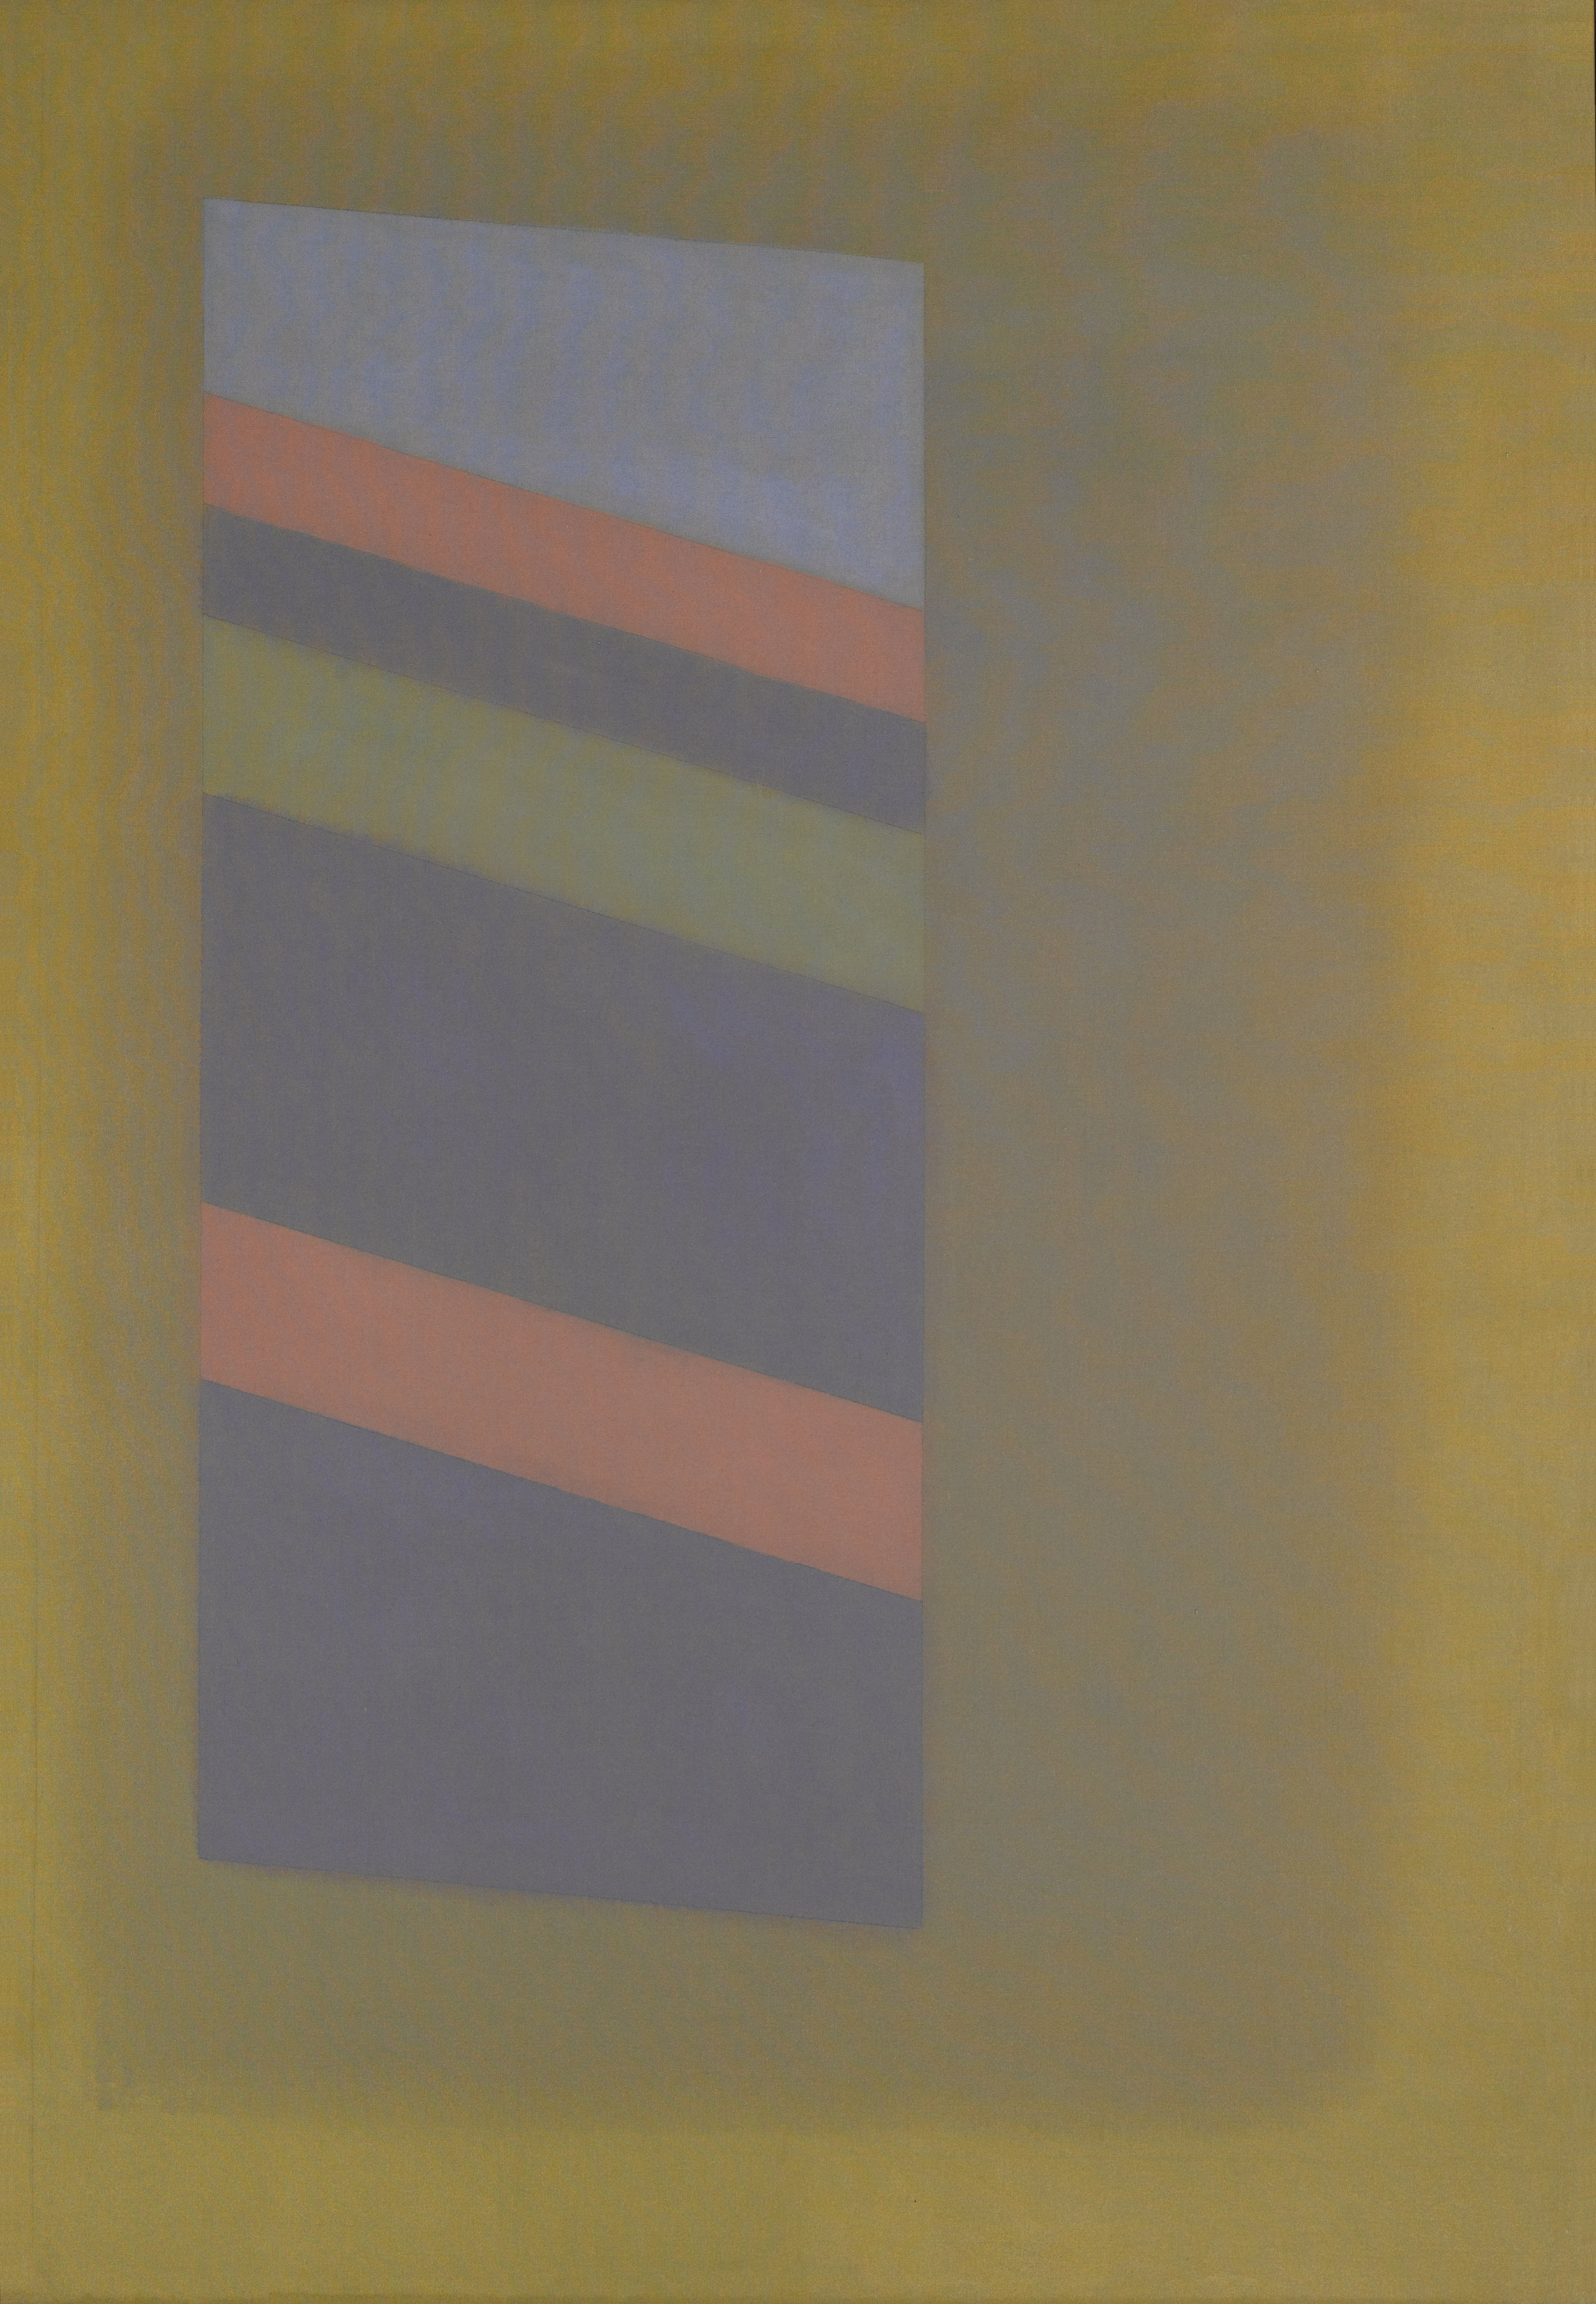   Charles Pollock  (1902-1988)  NY21 , 1969 Acrylic on canvas 72 x 50 inches 183 x 127 cm 